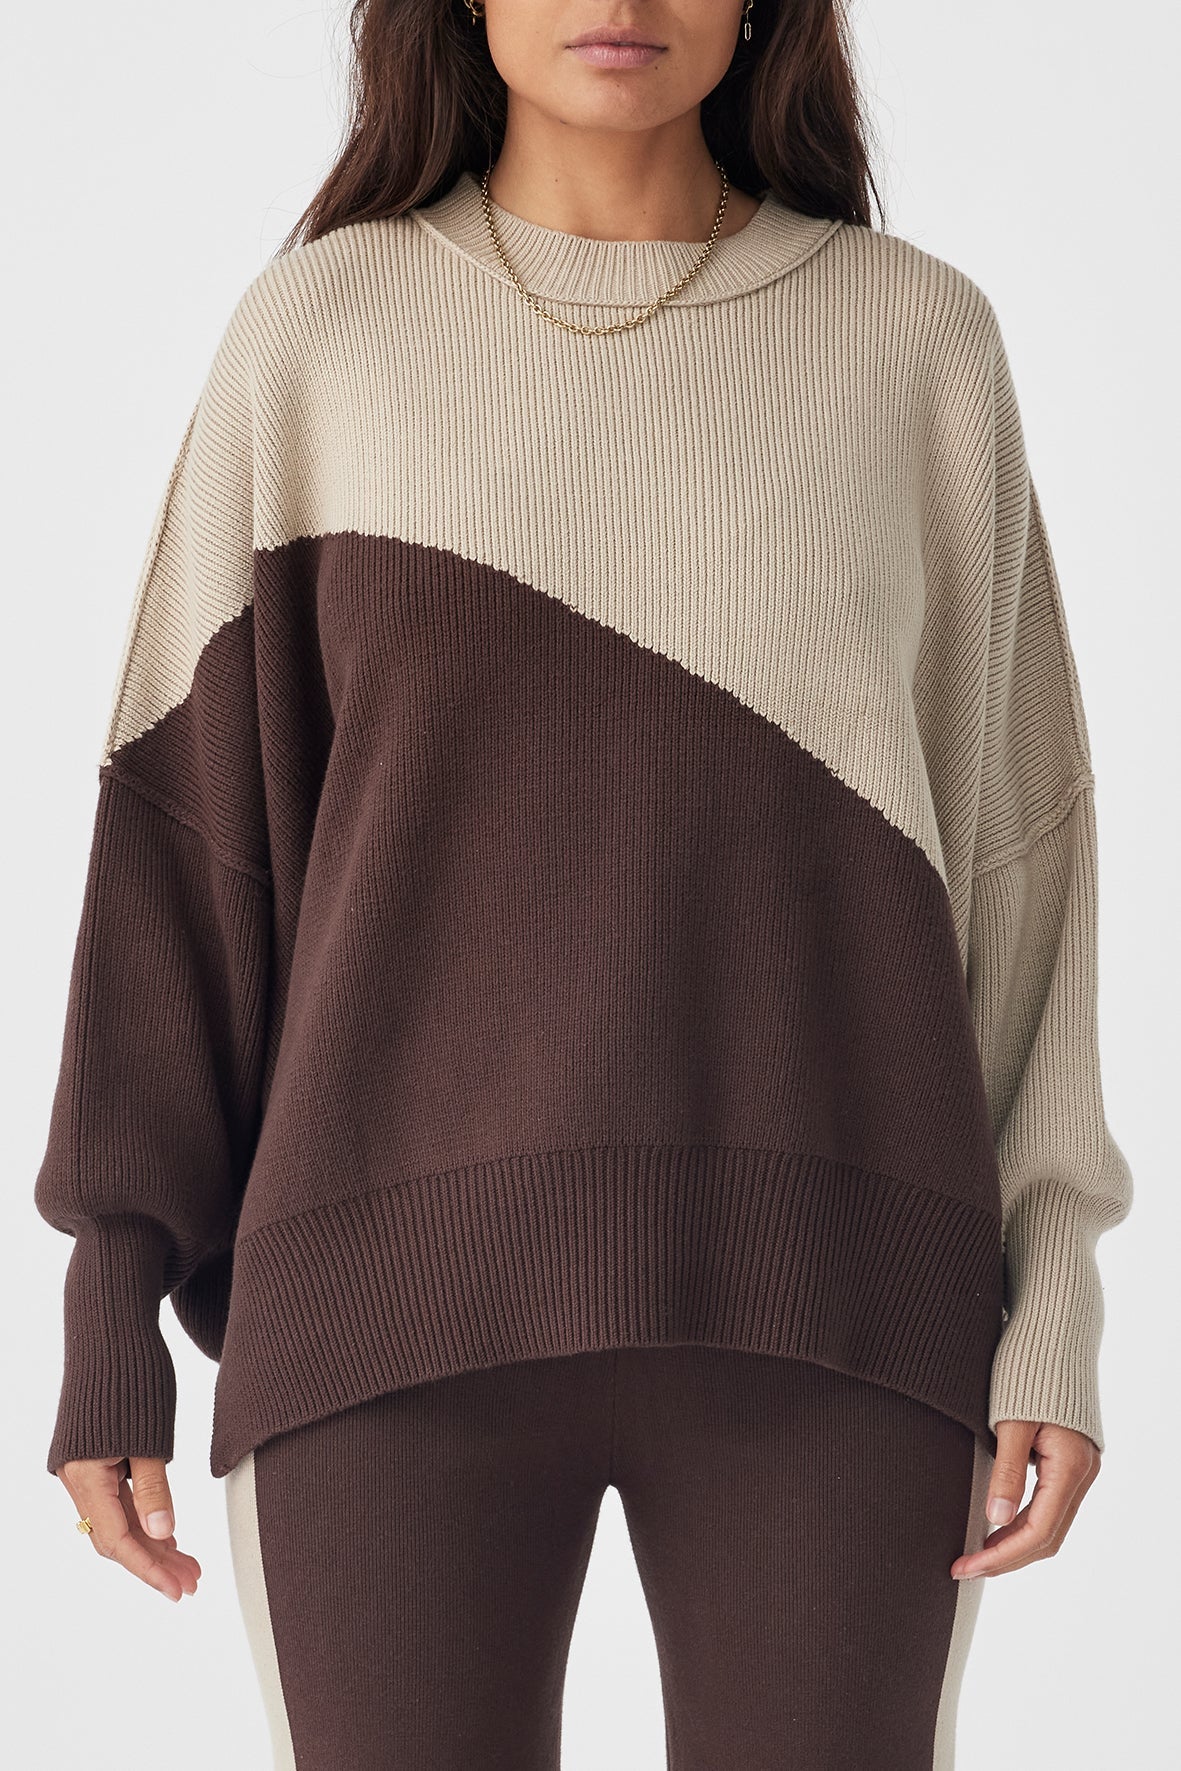 ARCAA Neo sweater - Chocolate & taupe